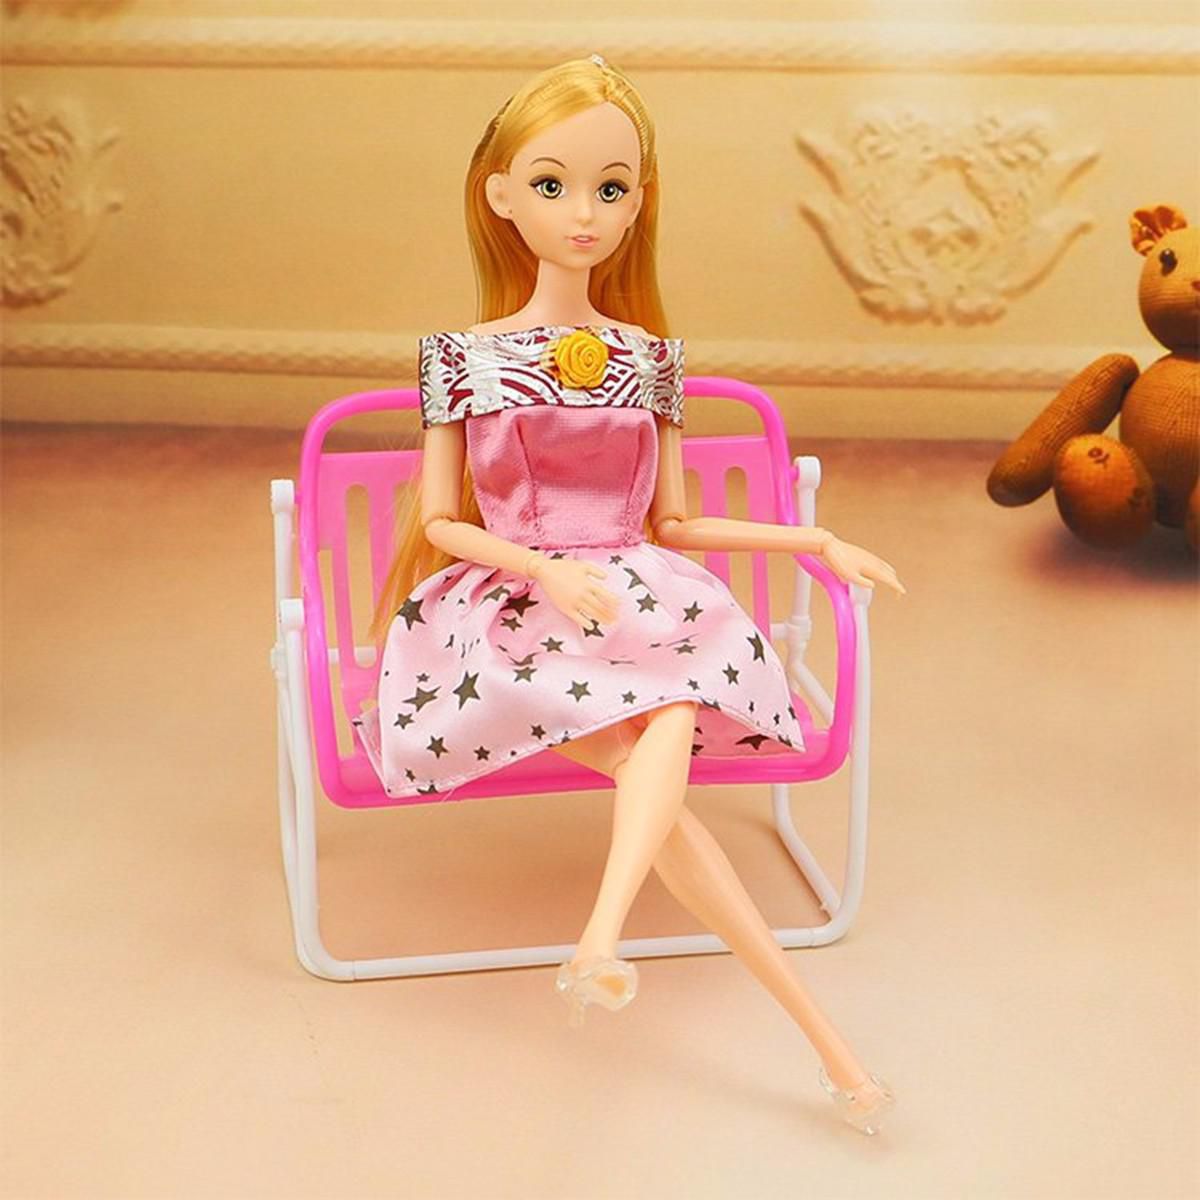 Mini Kid Girl Barbie Doll Furniture Chair Toy Accessories Living Room Dollhouse Buy Mini Kid Girl Barbie Doll Furniture Chair Toy Accessories Living Room Dollhouse Online At Low Price Snapdeal